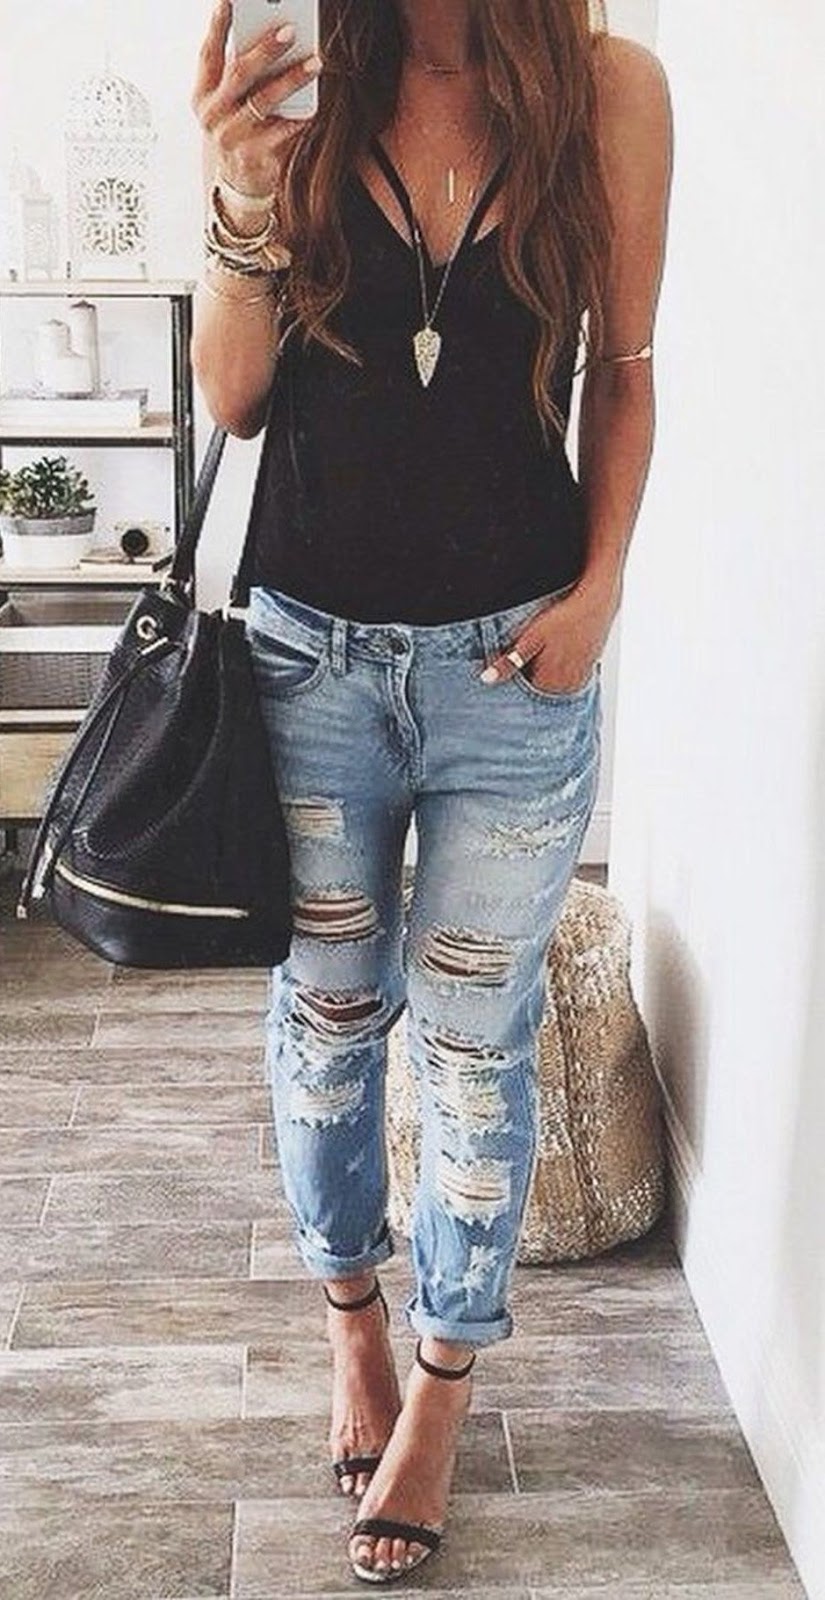 how to wear distressed jeans : bag + black top + heels